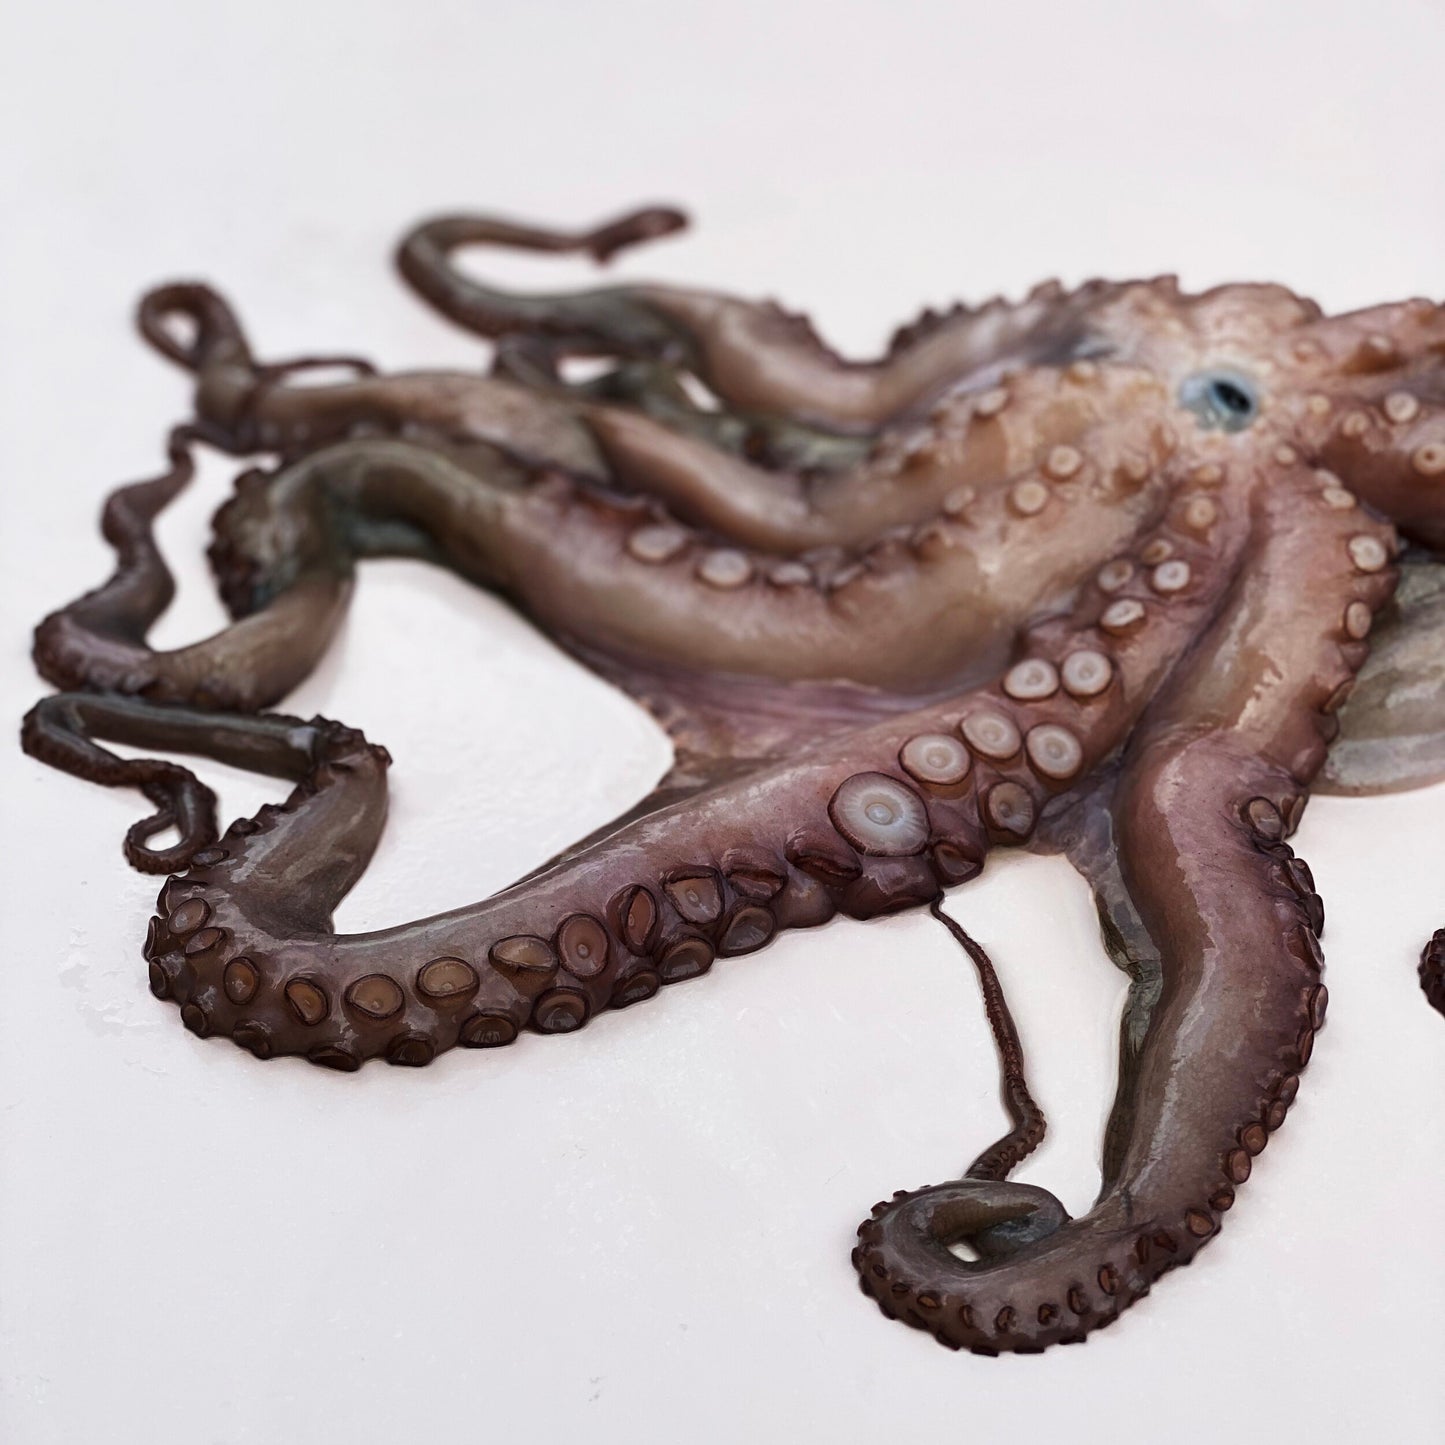 Galician Octopus